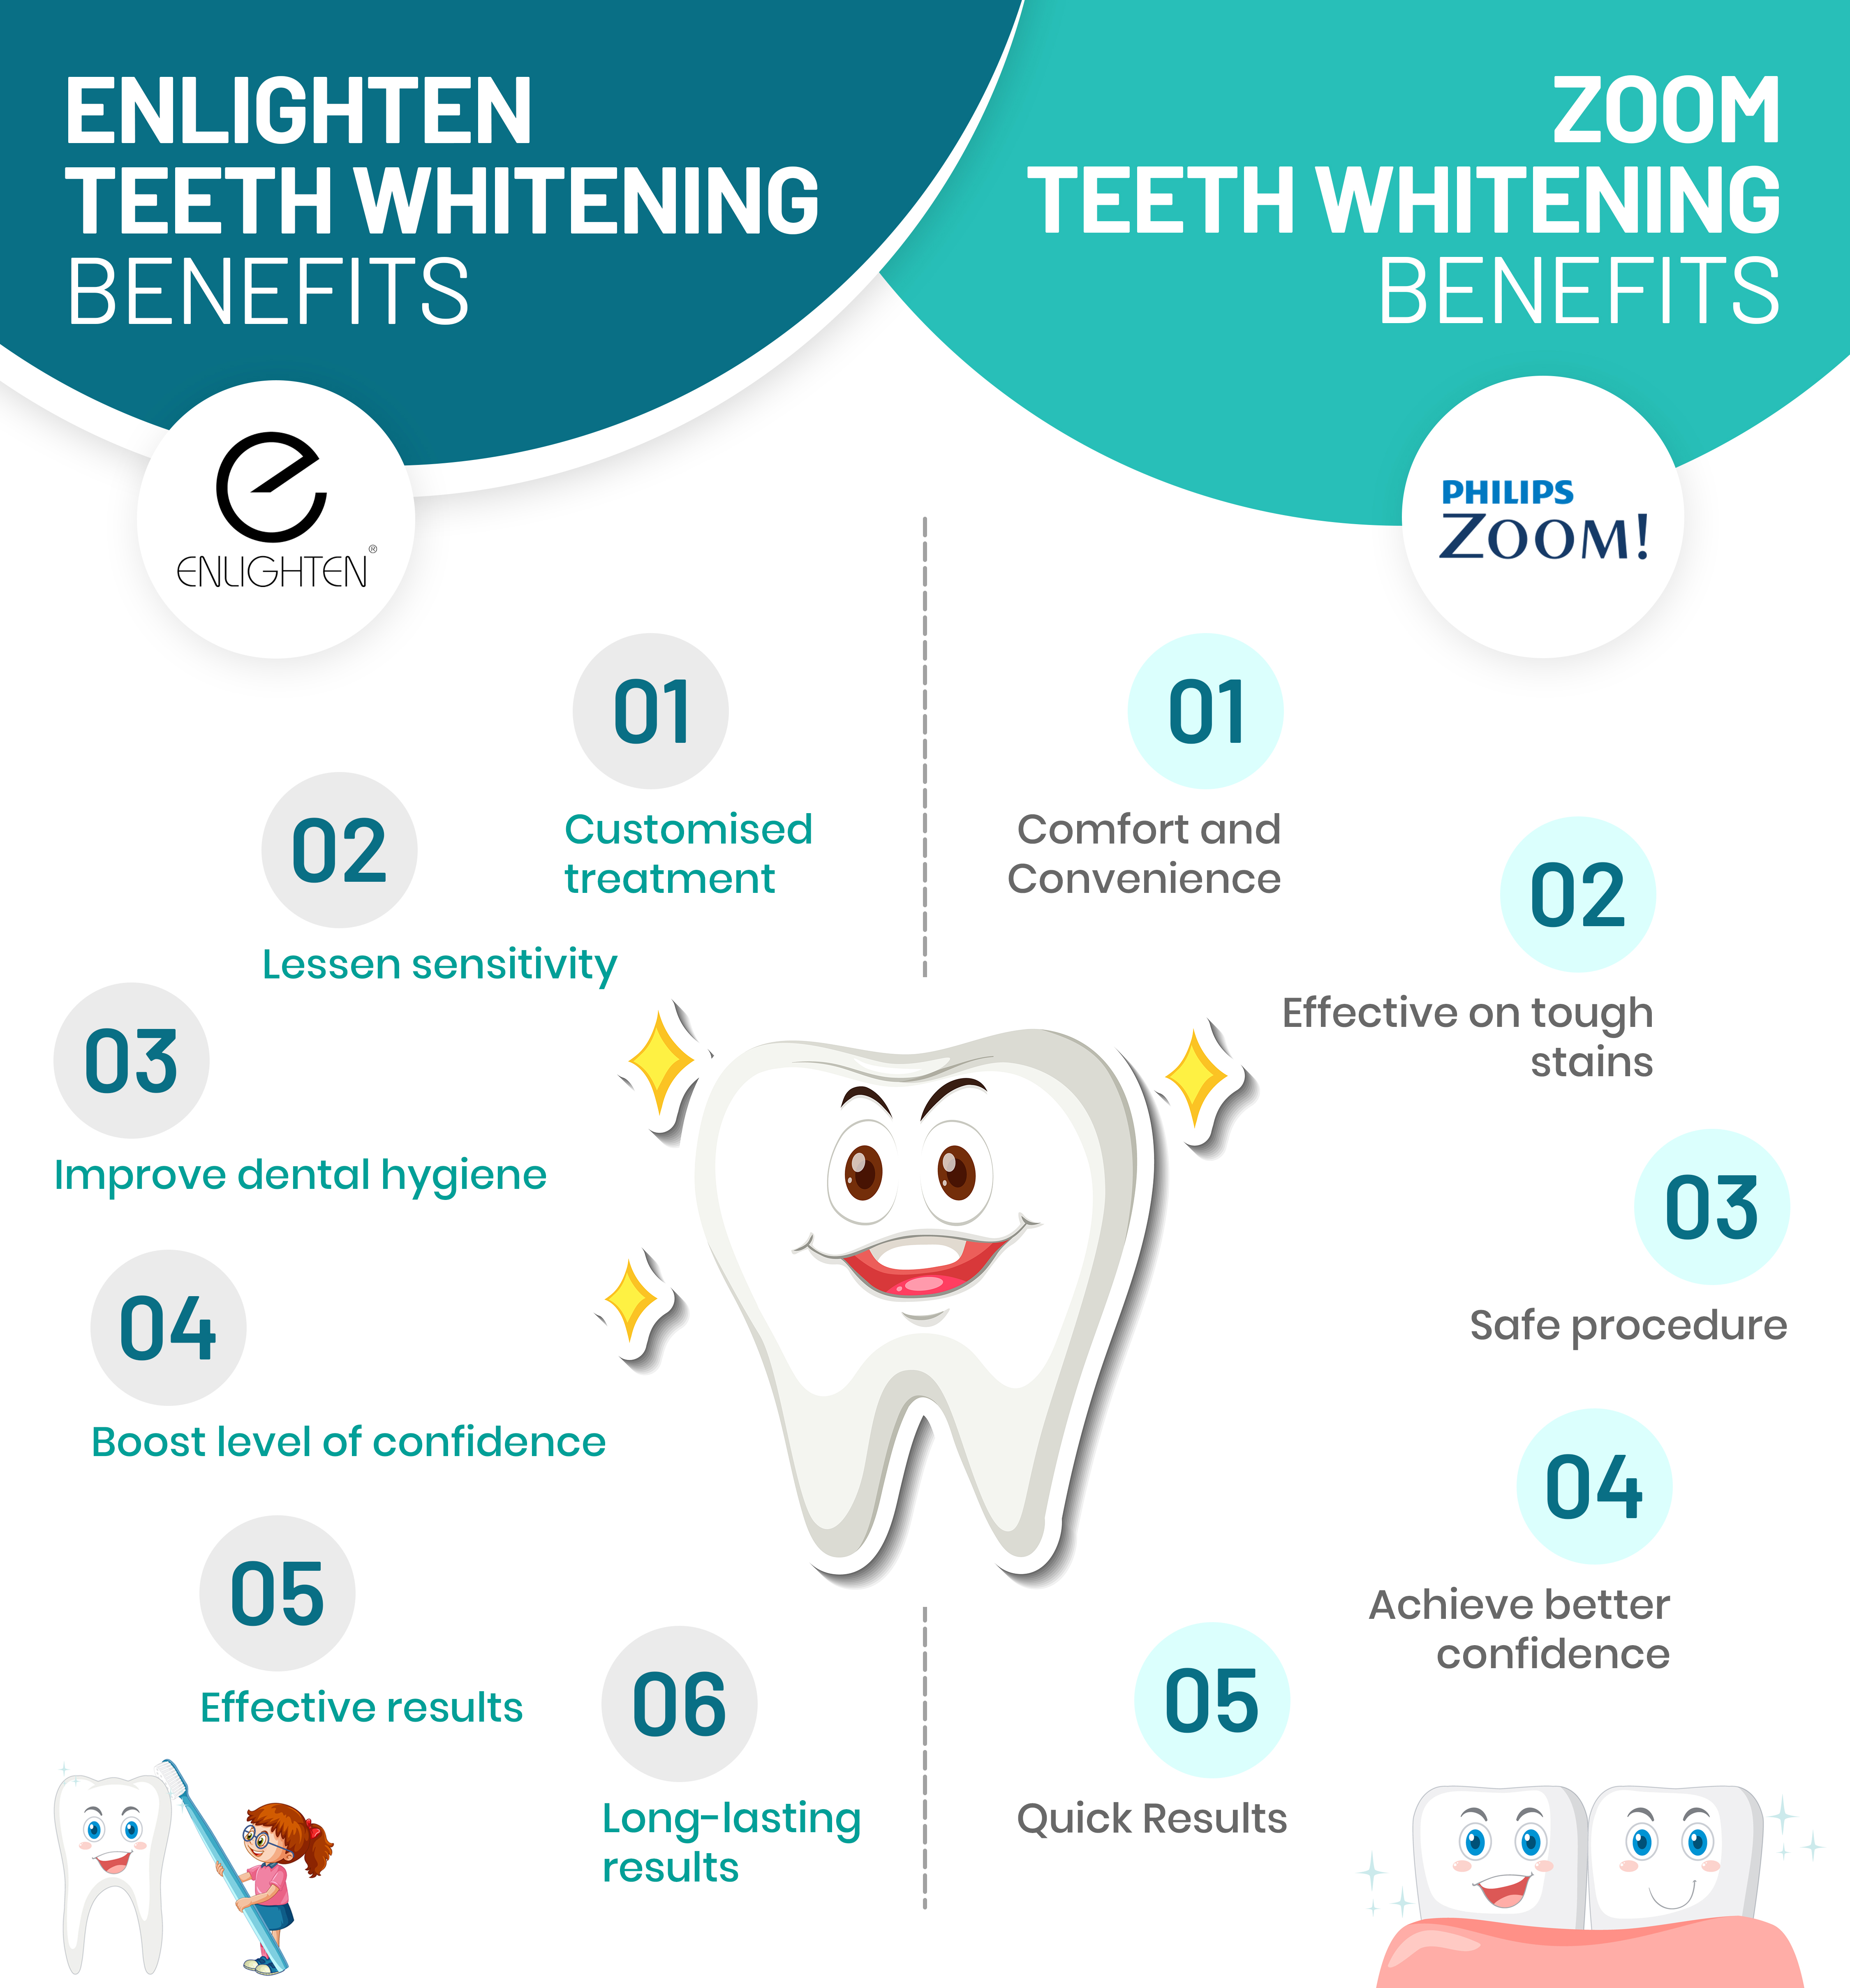 Enlighten Teeth Whitening Benefits / Zoom Teeth Whitening Benefits